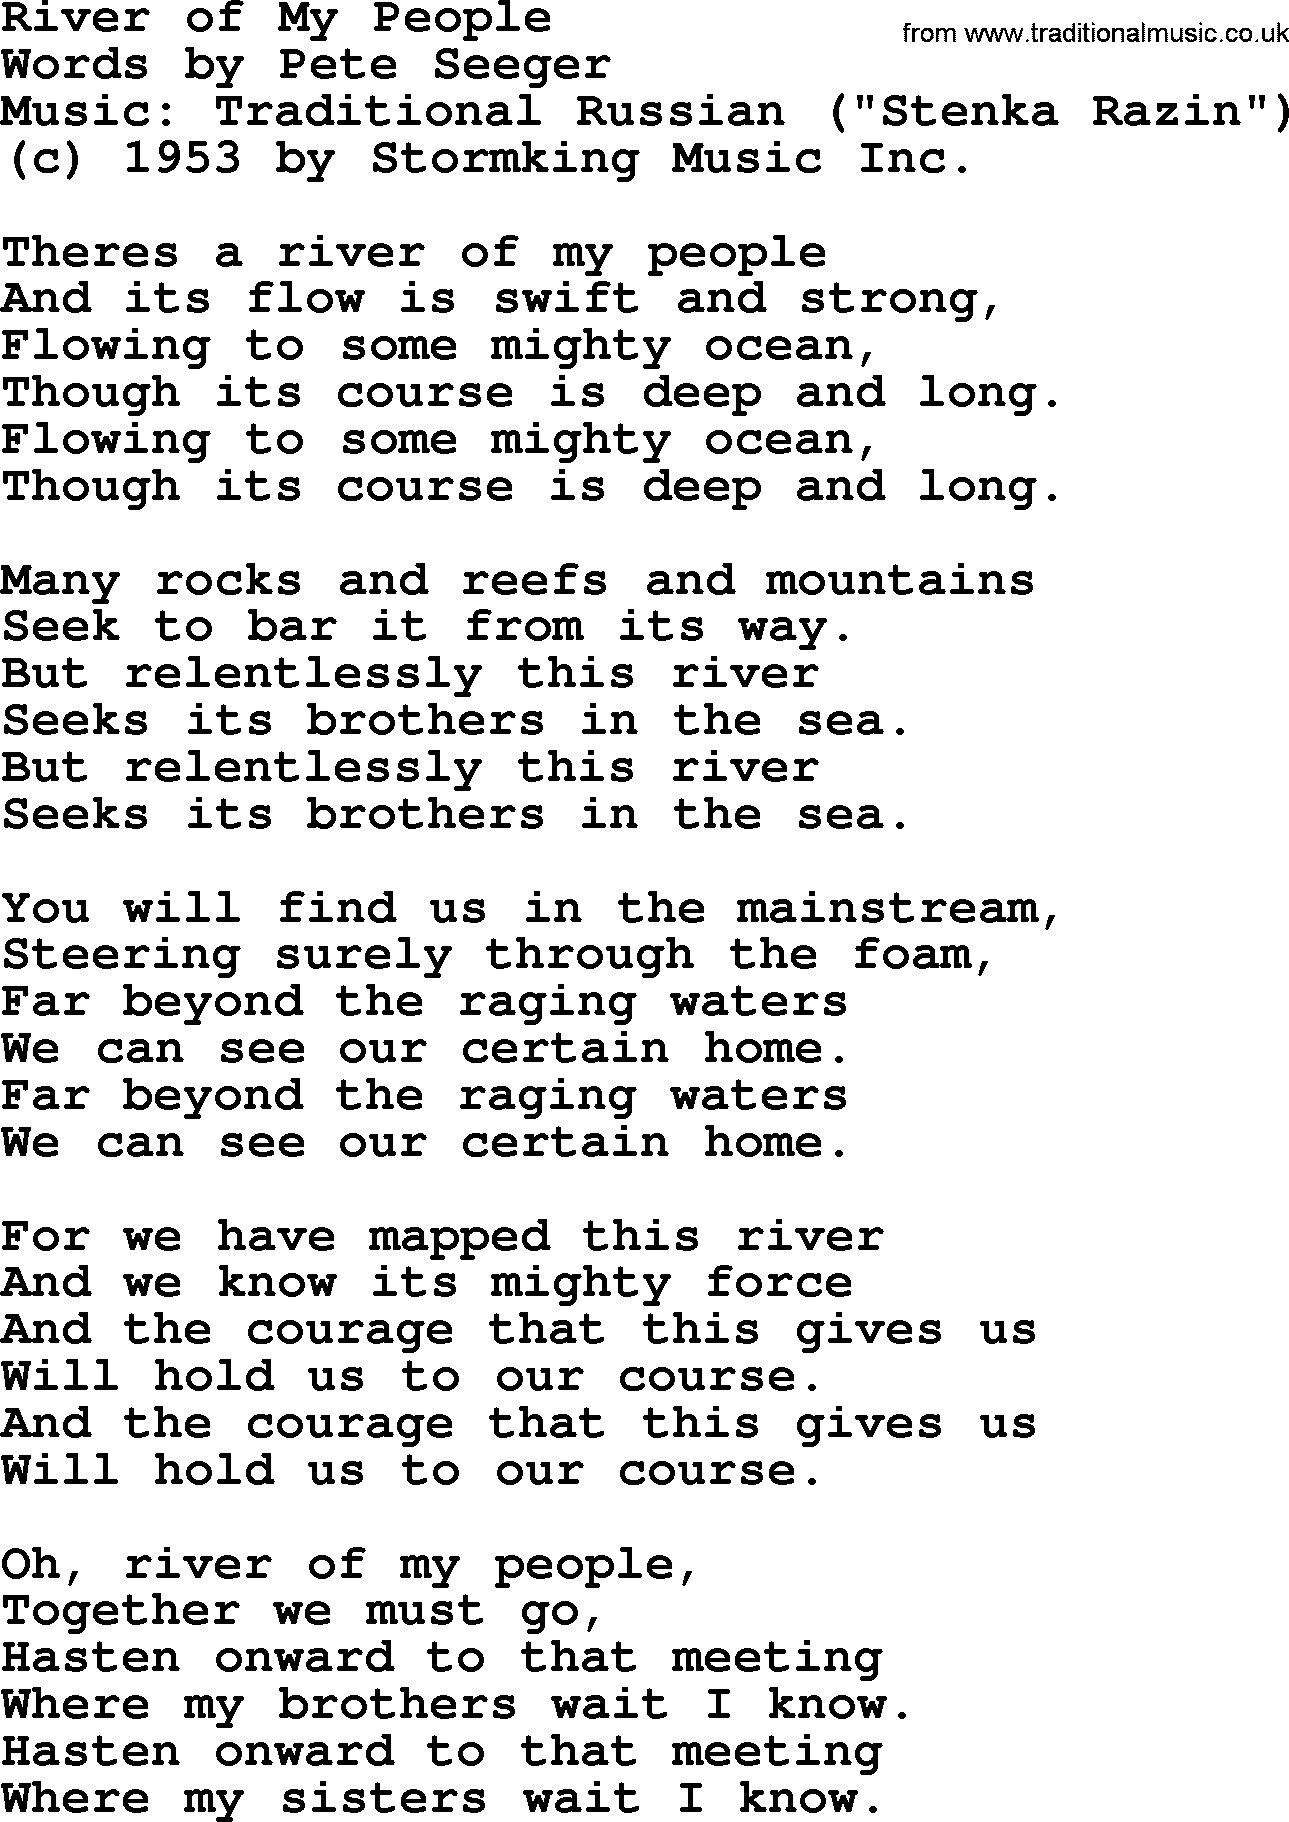 Pete Seeger song River of My People-Pete-Seeger.txt lyrics